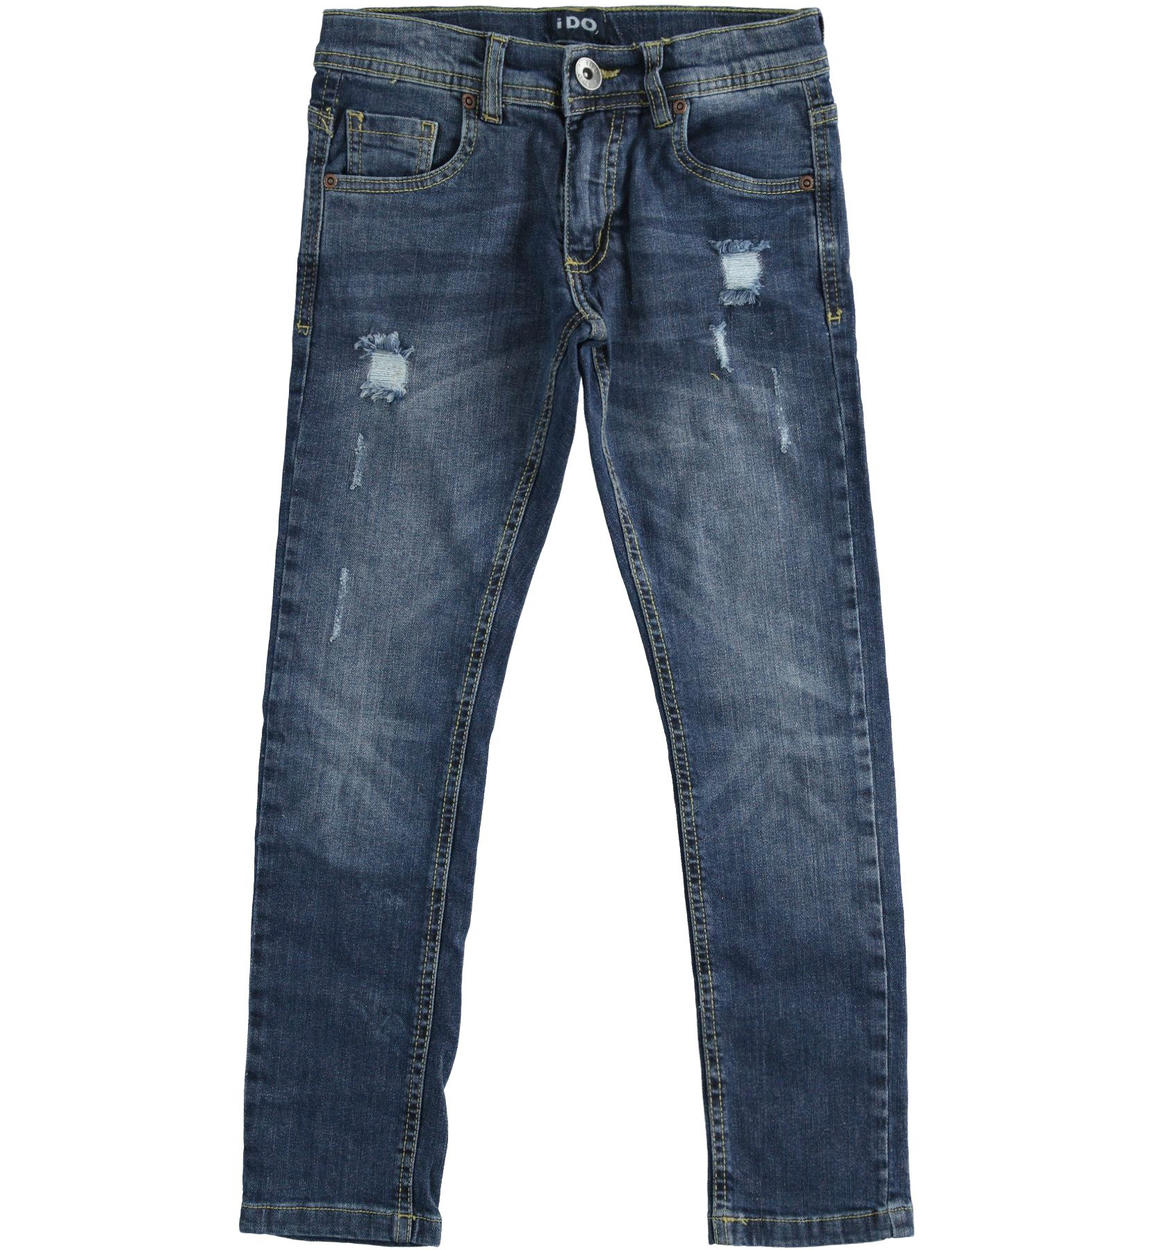 Jeans bambino in denim strtech di cotone BLU iDO